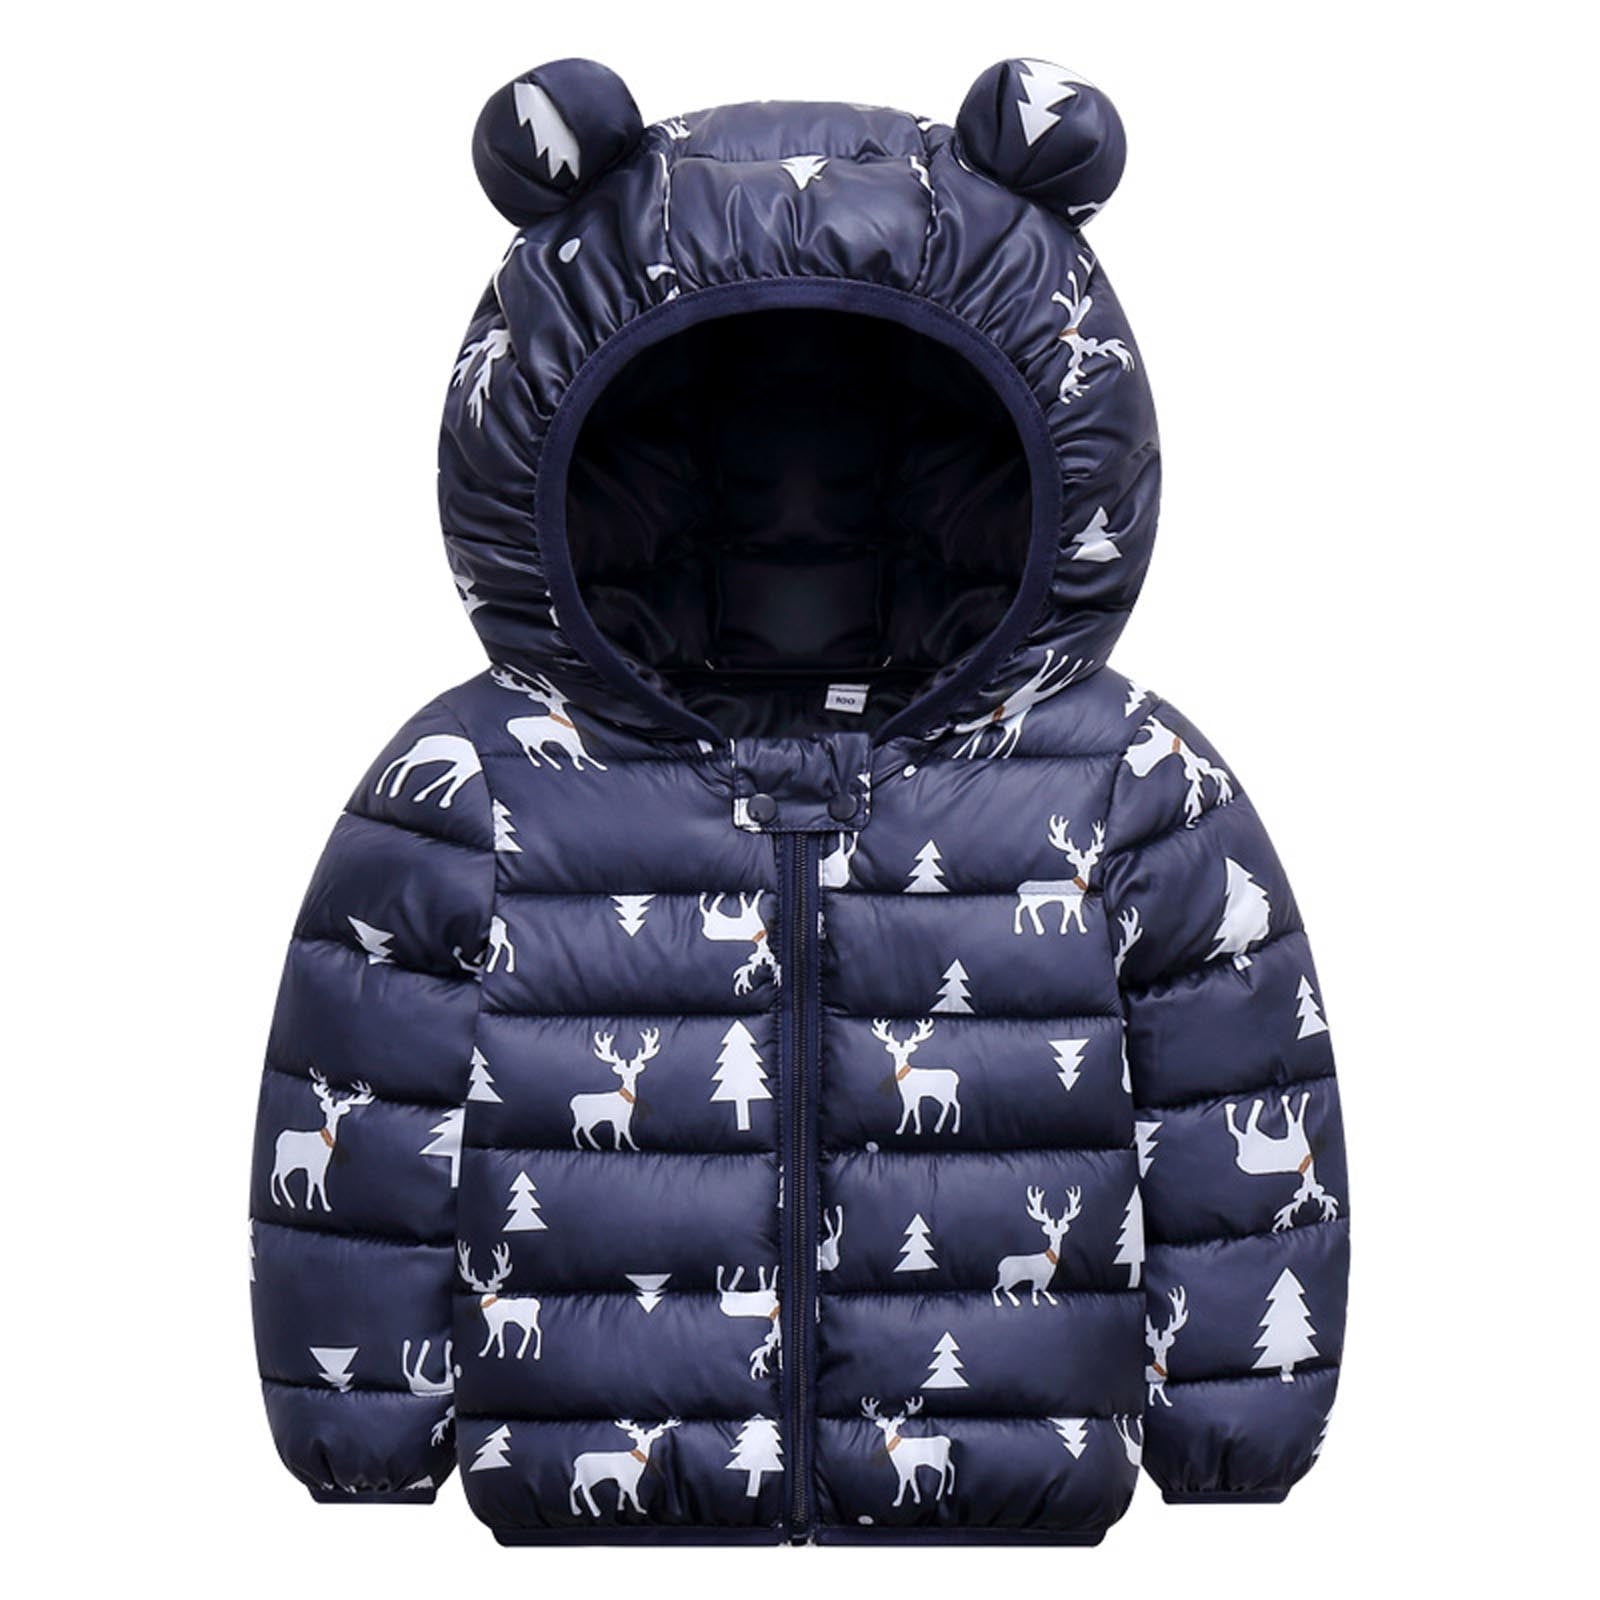 Toddler Baby Winter Christmas Cartoon Windproof Coat Hooded Warm Outwear Jacket 